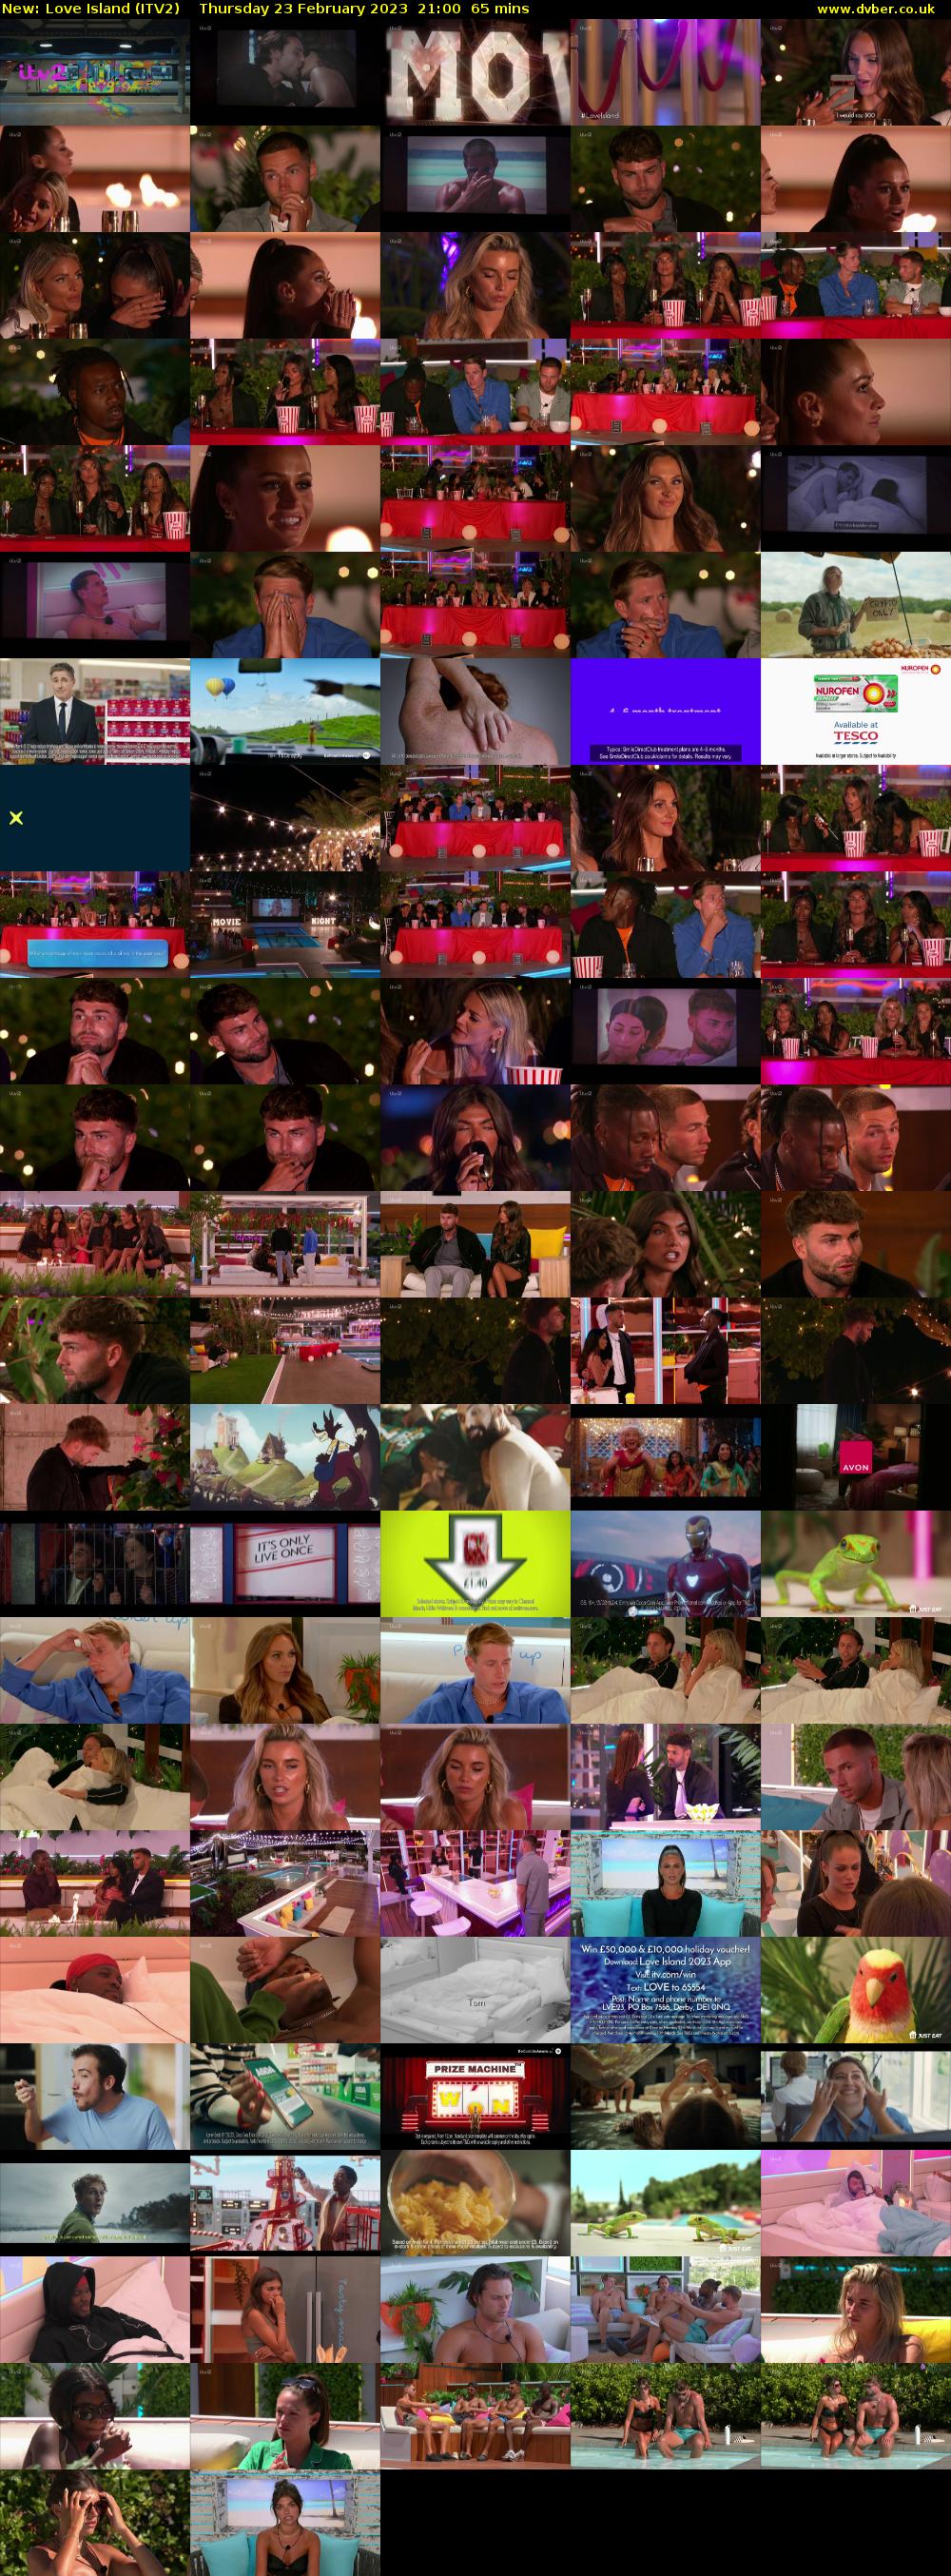 Love Island (ITV2) Thursday 23 February 2023 21:00 - 22:05